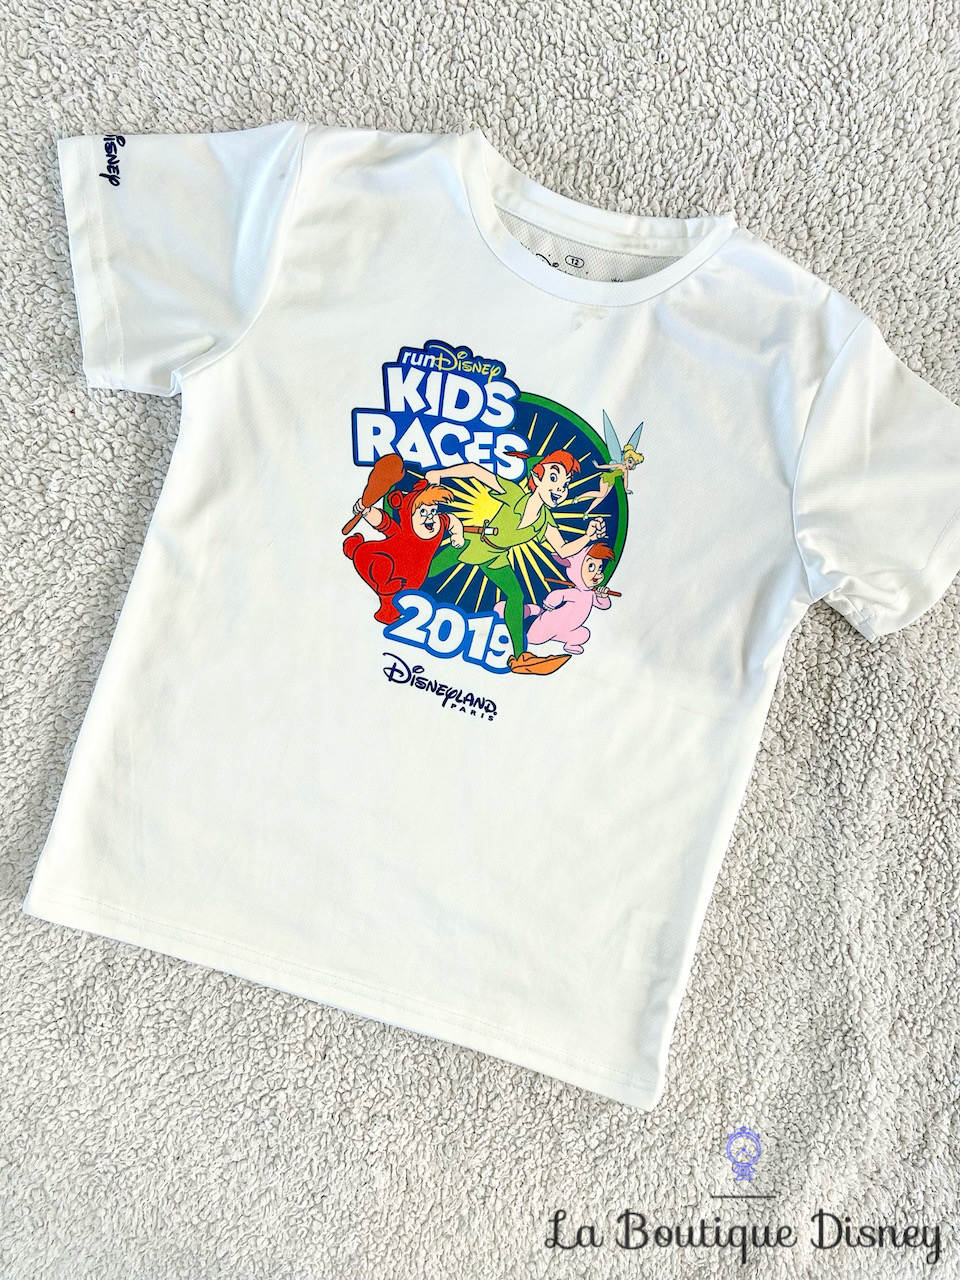 Tee shirt Run Disney Kids Races 2019 Peter Pan Disneyland Paris taille 12 ans blanc sport